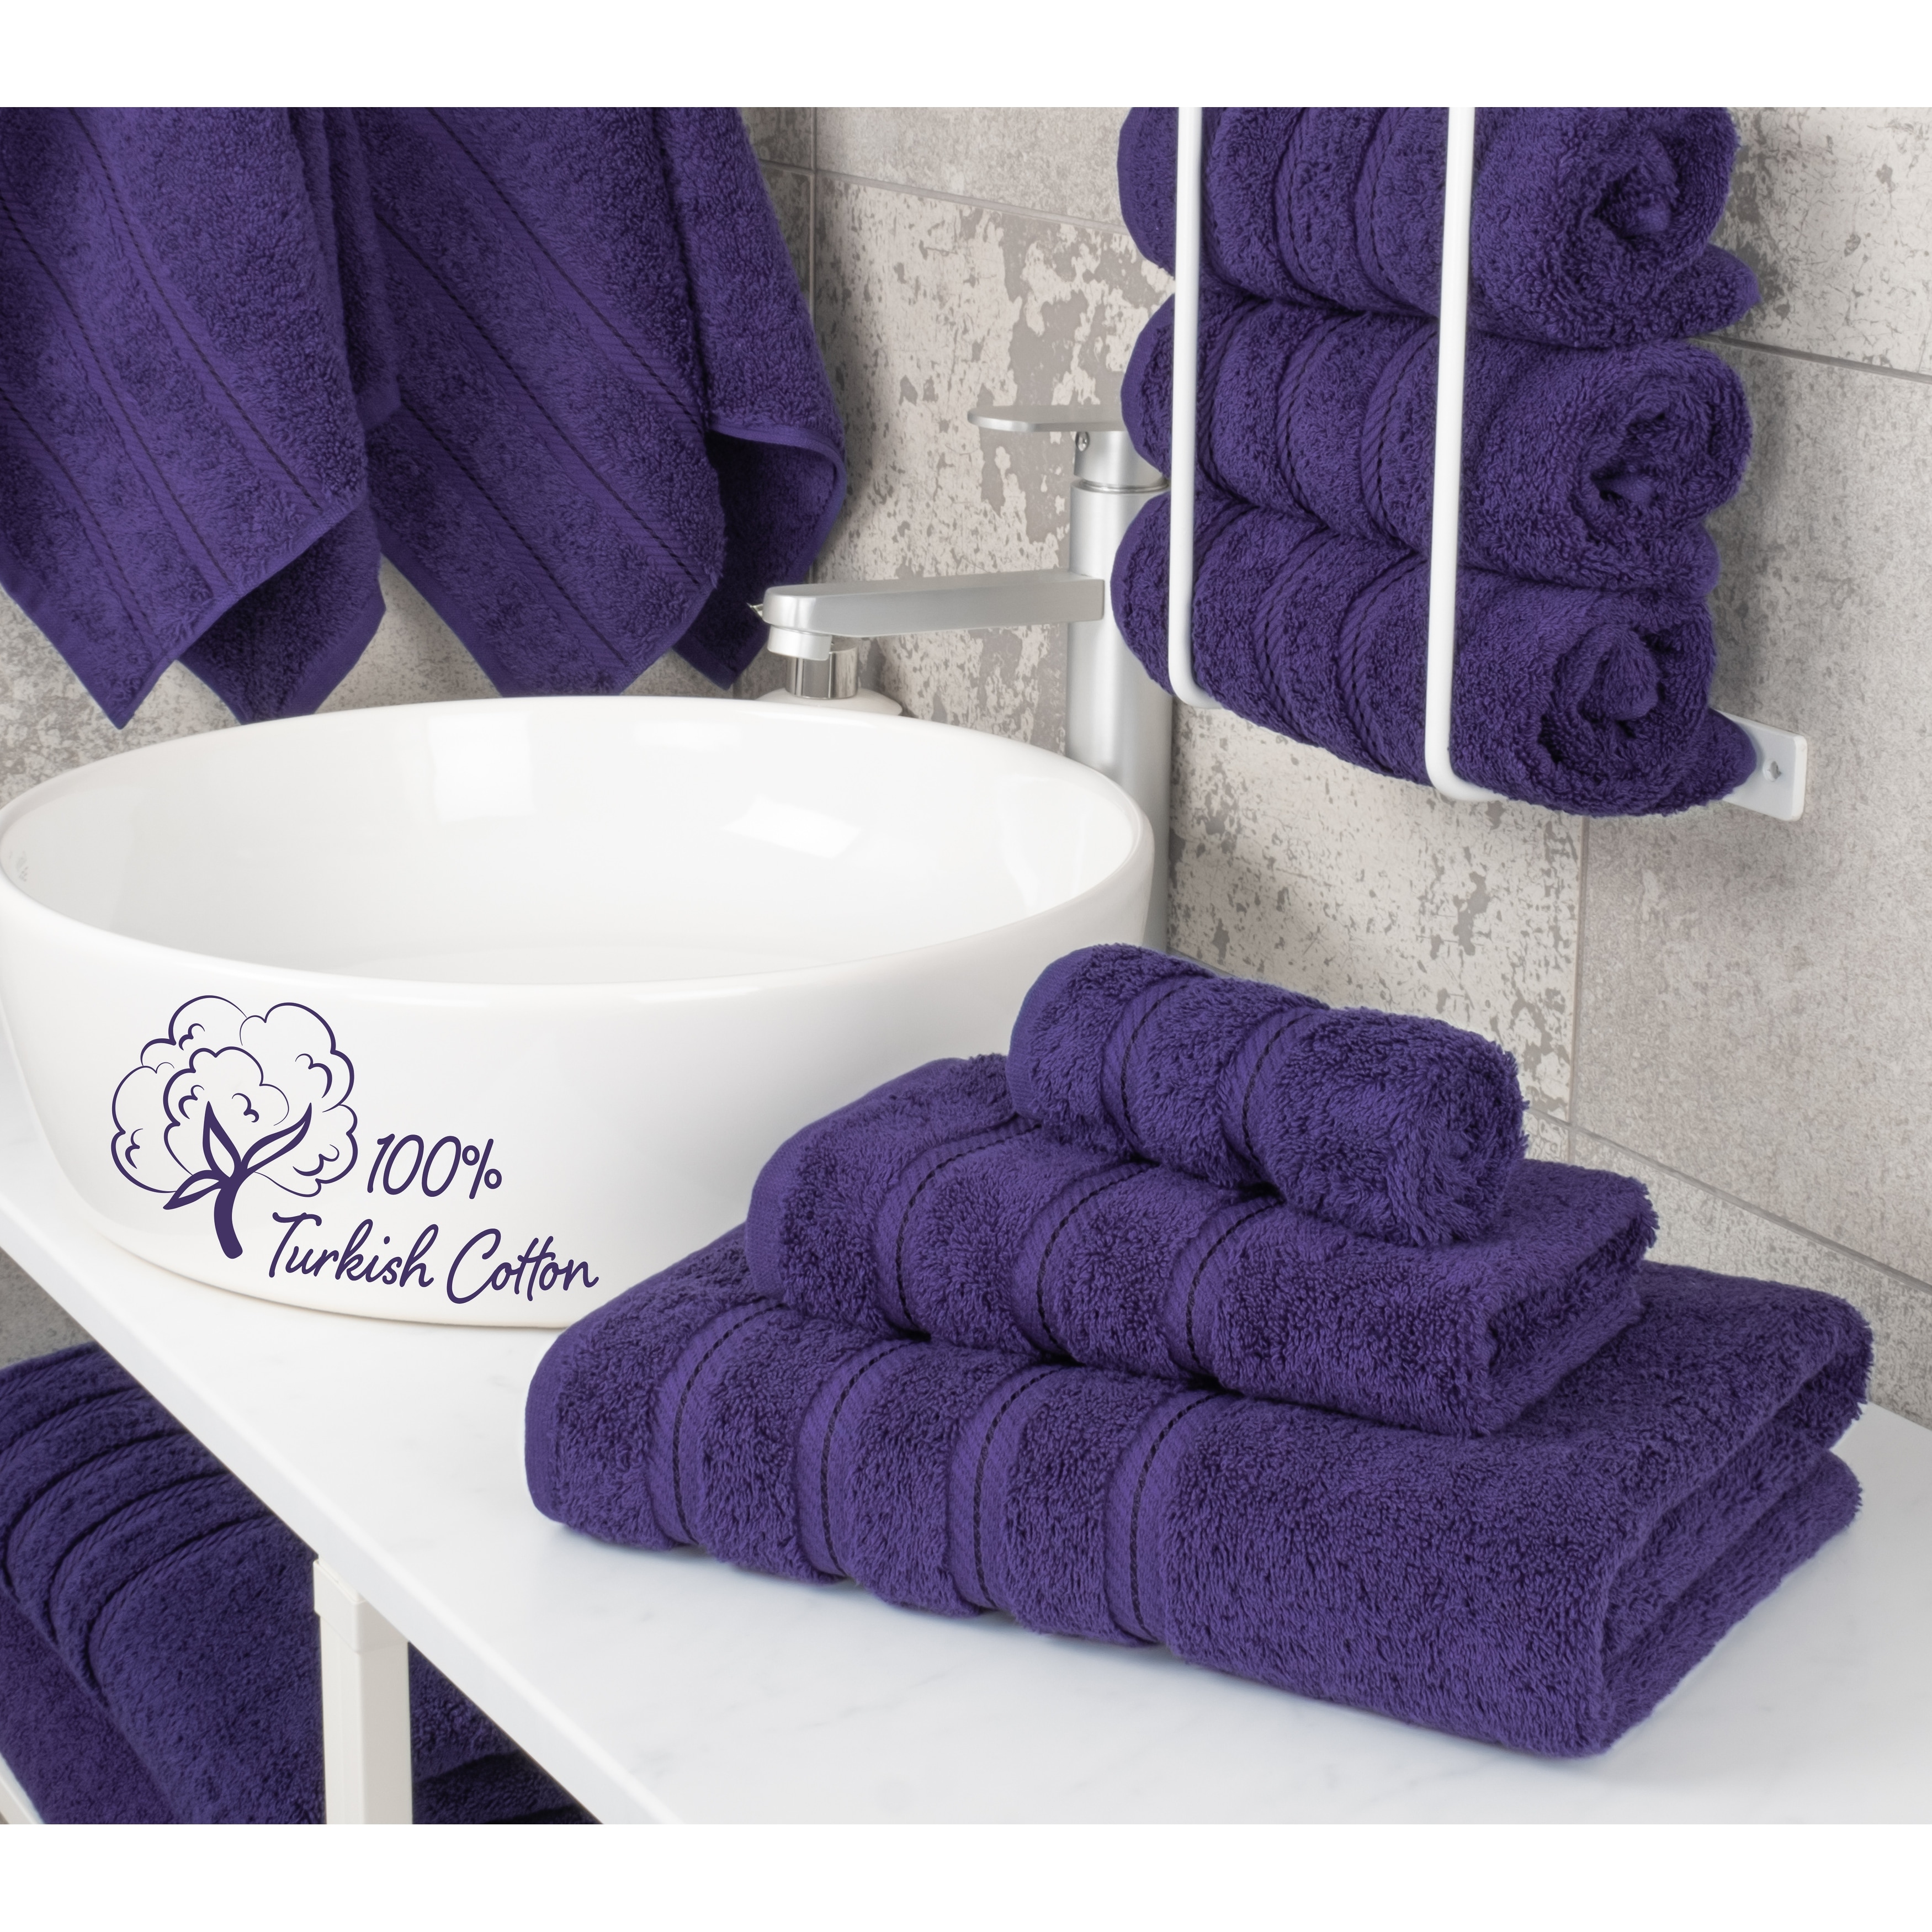 https://ak1.ostkcdn.com/images/products/is/images/direct/c6f5dbe7560c56c233cb74b50dfbac59b7b4b720/American-Soft-Linen-3-Piece%2C-100%25-Genuine-Turkish-Cotton-Premium-%26-Luxury-Towels-Bathroom-Sets.jpg